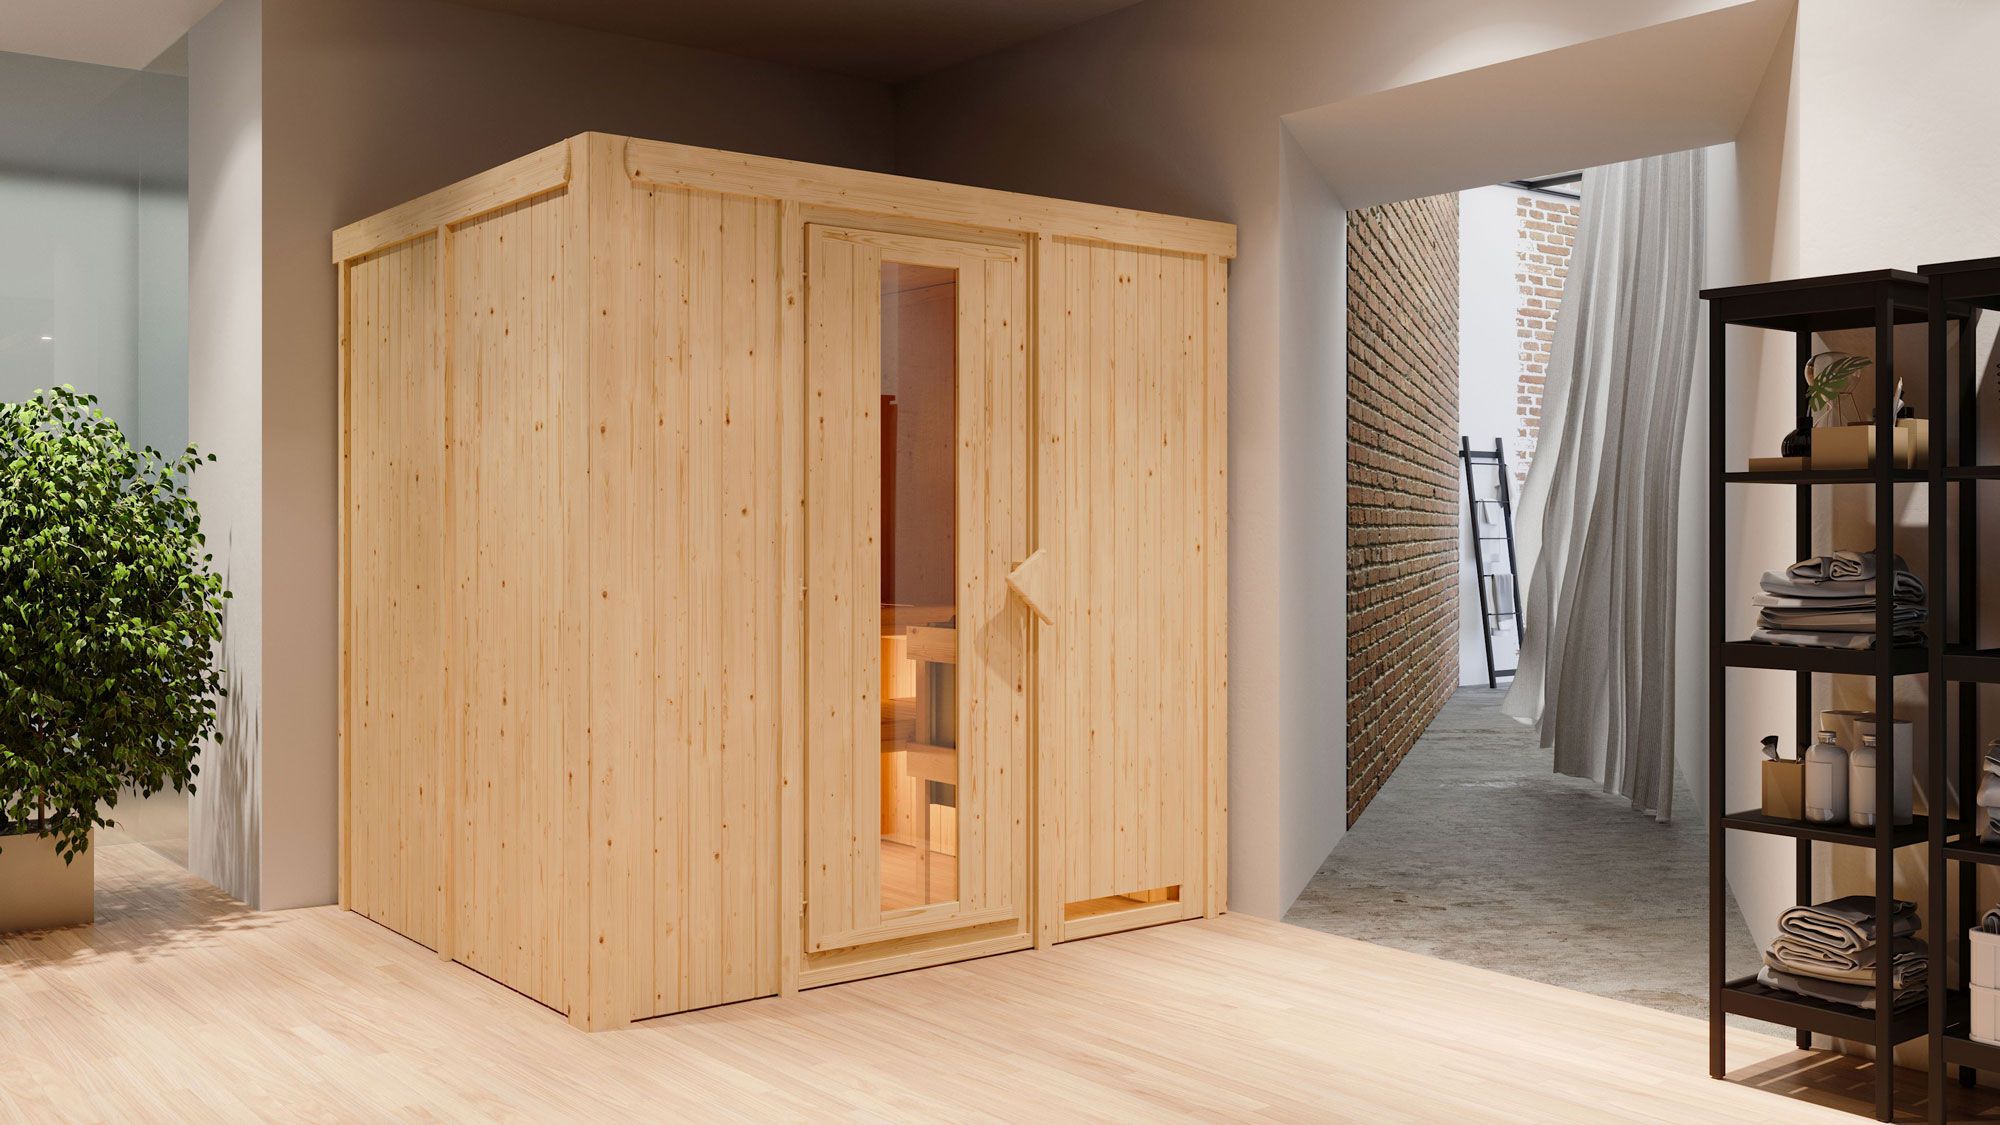 SET-sauna "Eemil" met energiebesparende deur - kleur: naturel, 9 kW kachel - 196 x 170 x 198 cm (B x D x H)